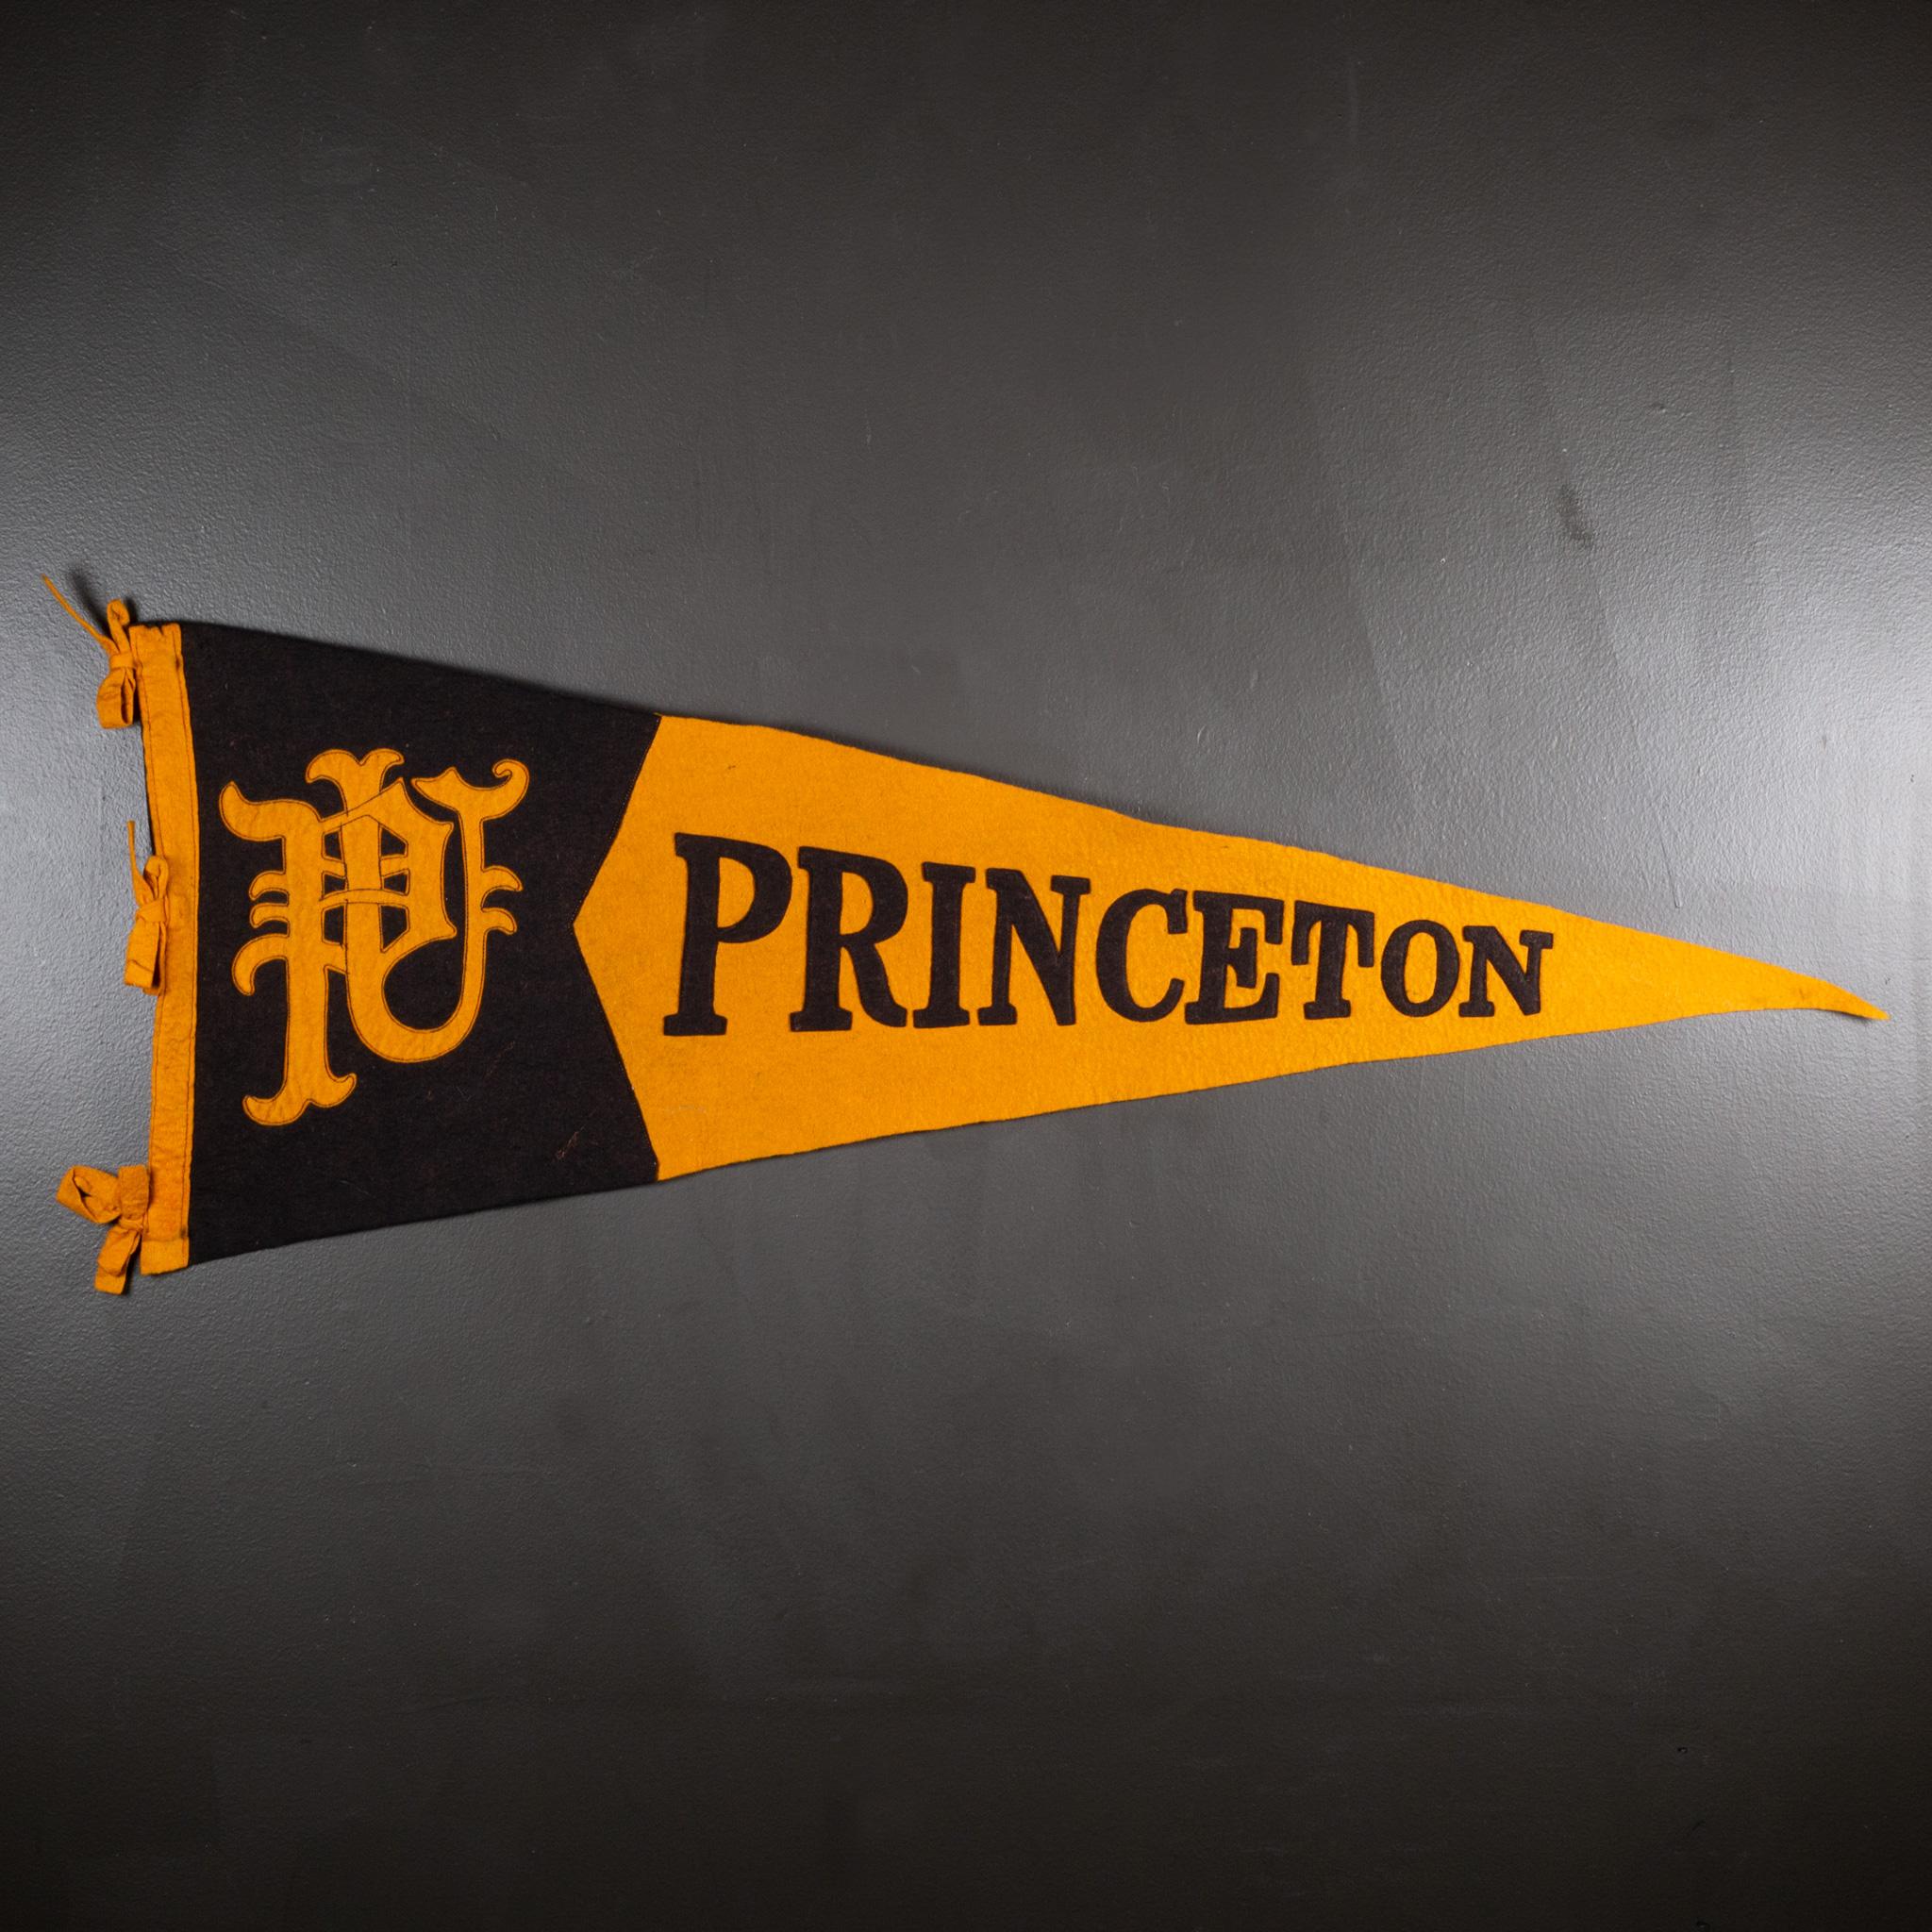 princeton pennant